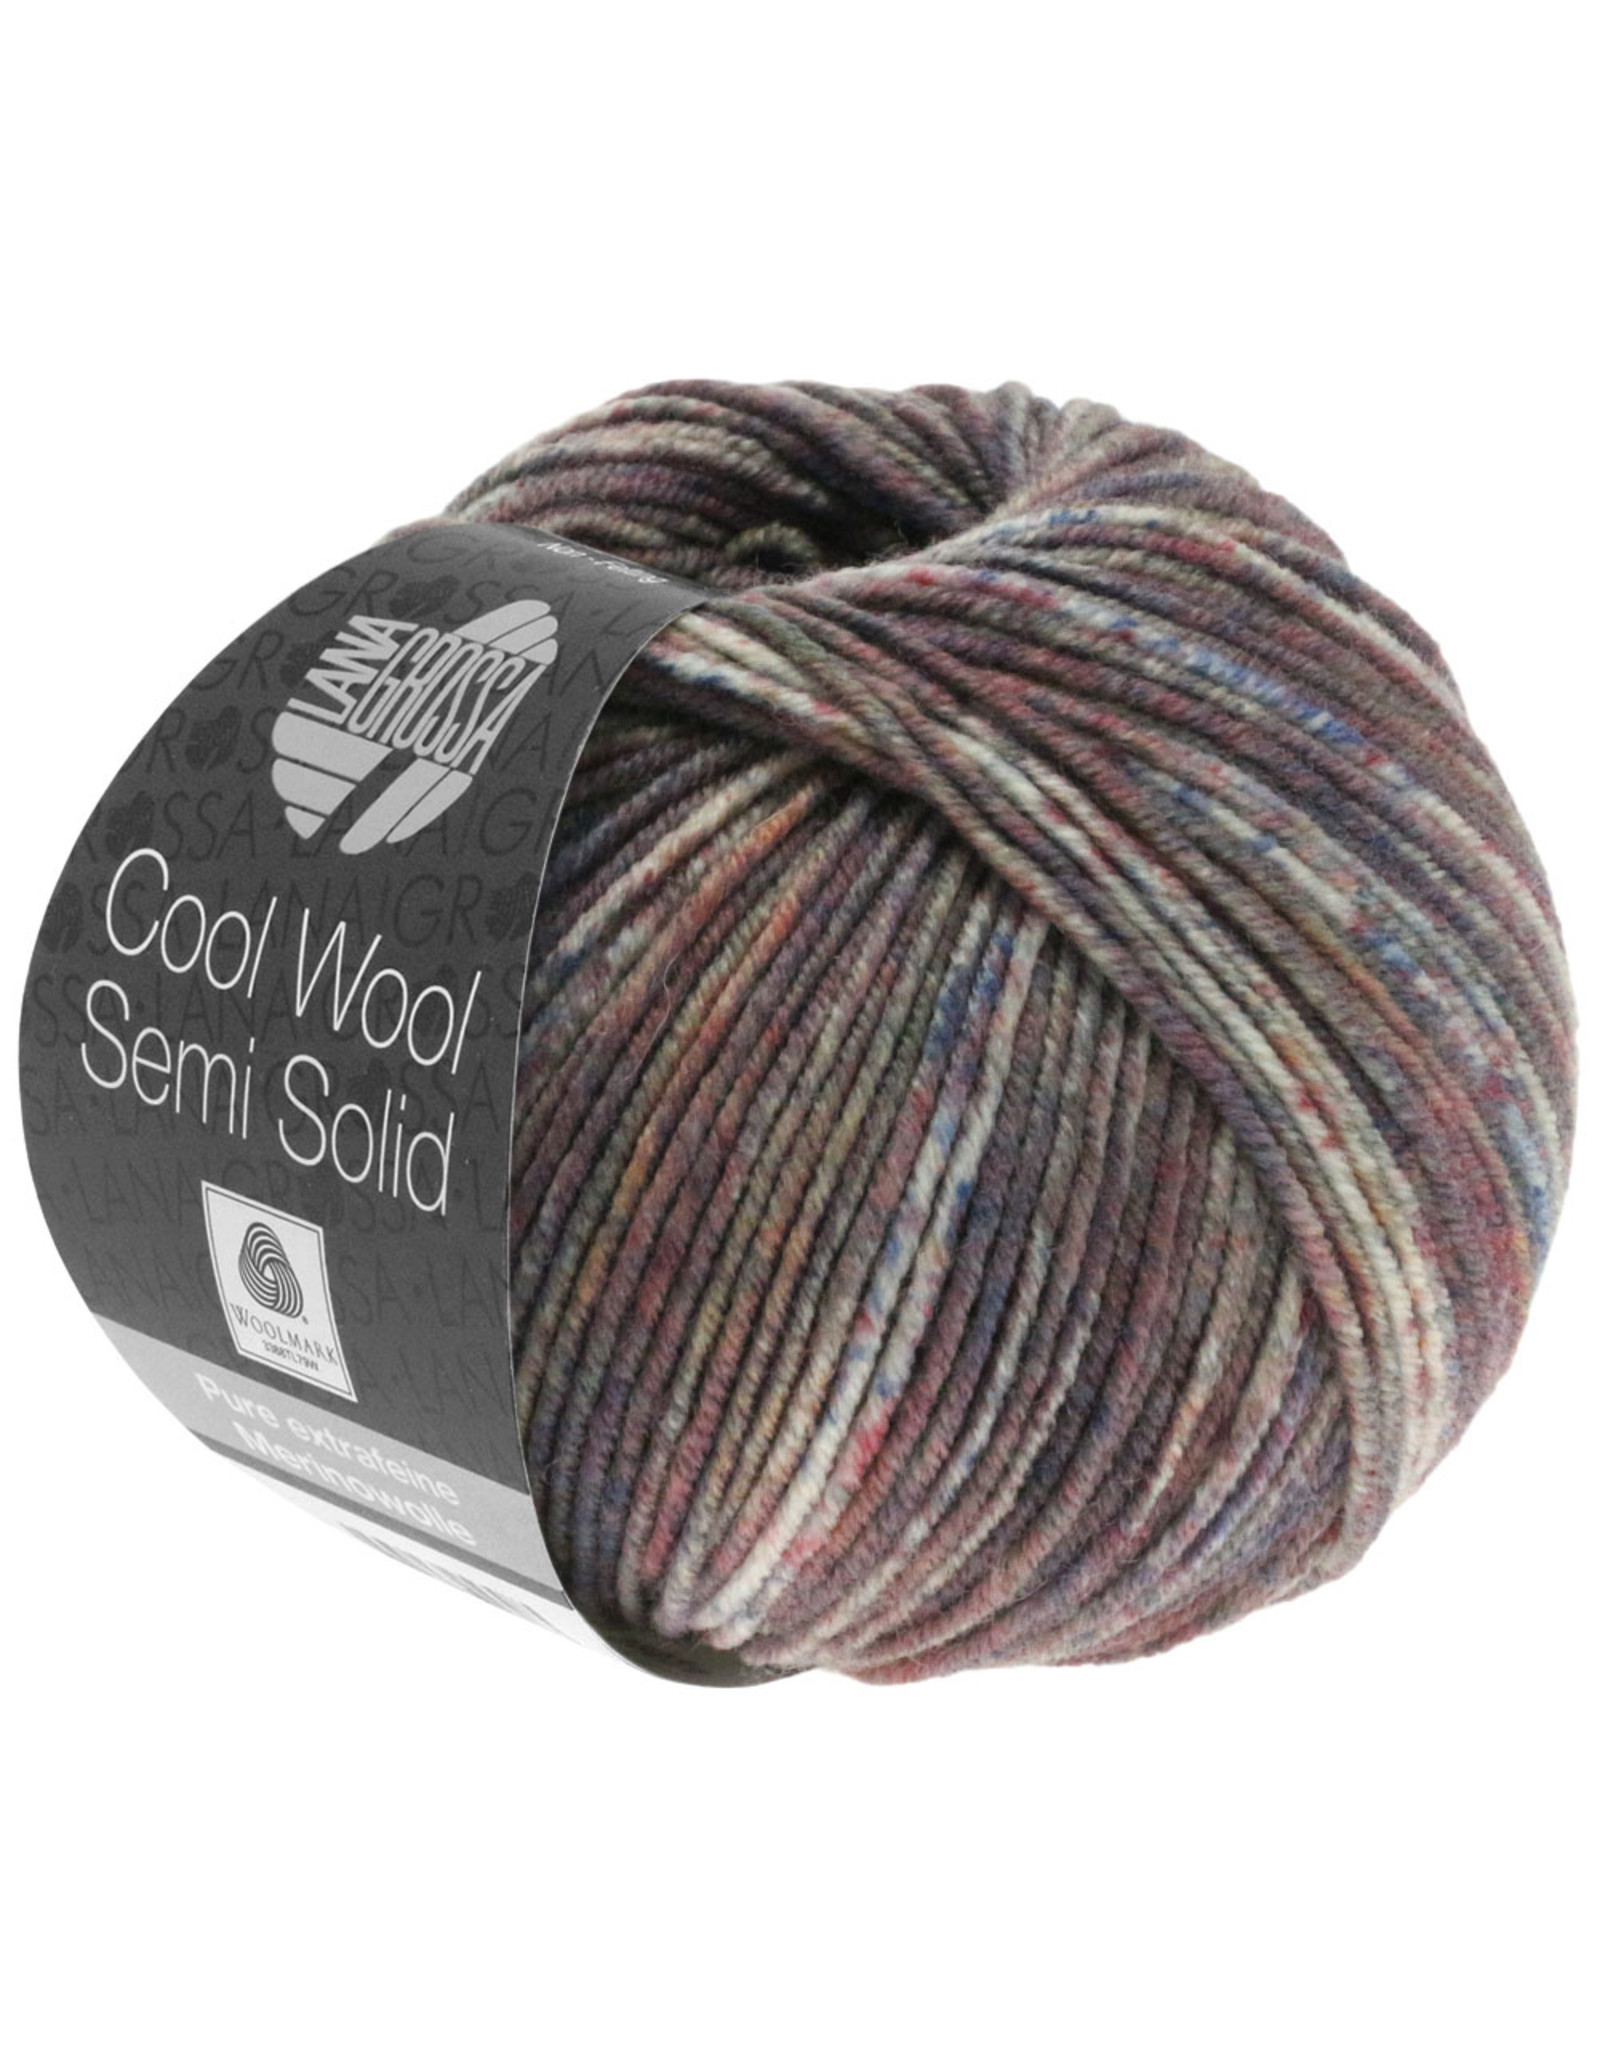 Lana Grossa Lana Grossa Cool wool semi solid 6513